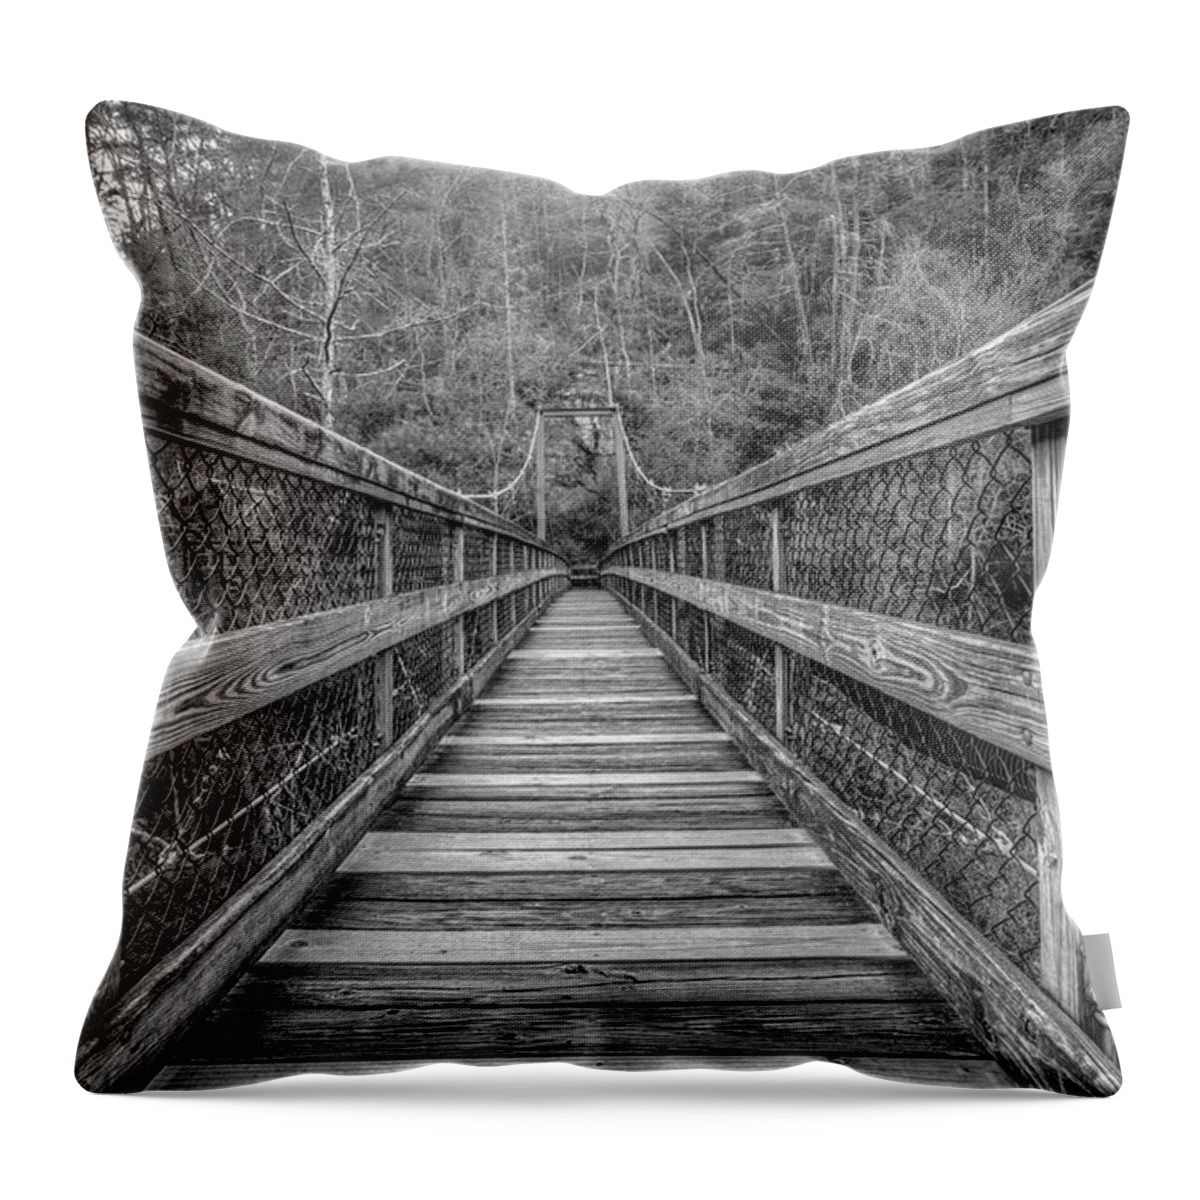 Tallulah Falls Bridge Throw Pillow featuring the photograph Infinity by Anna Rumiantseva